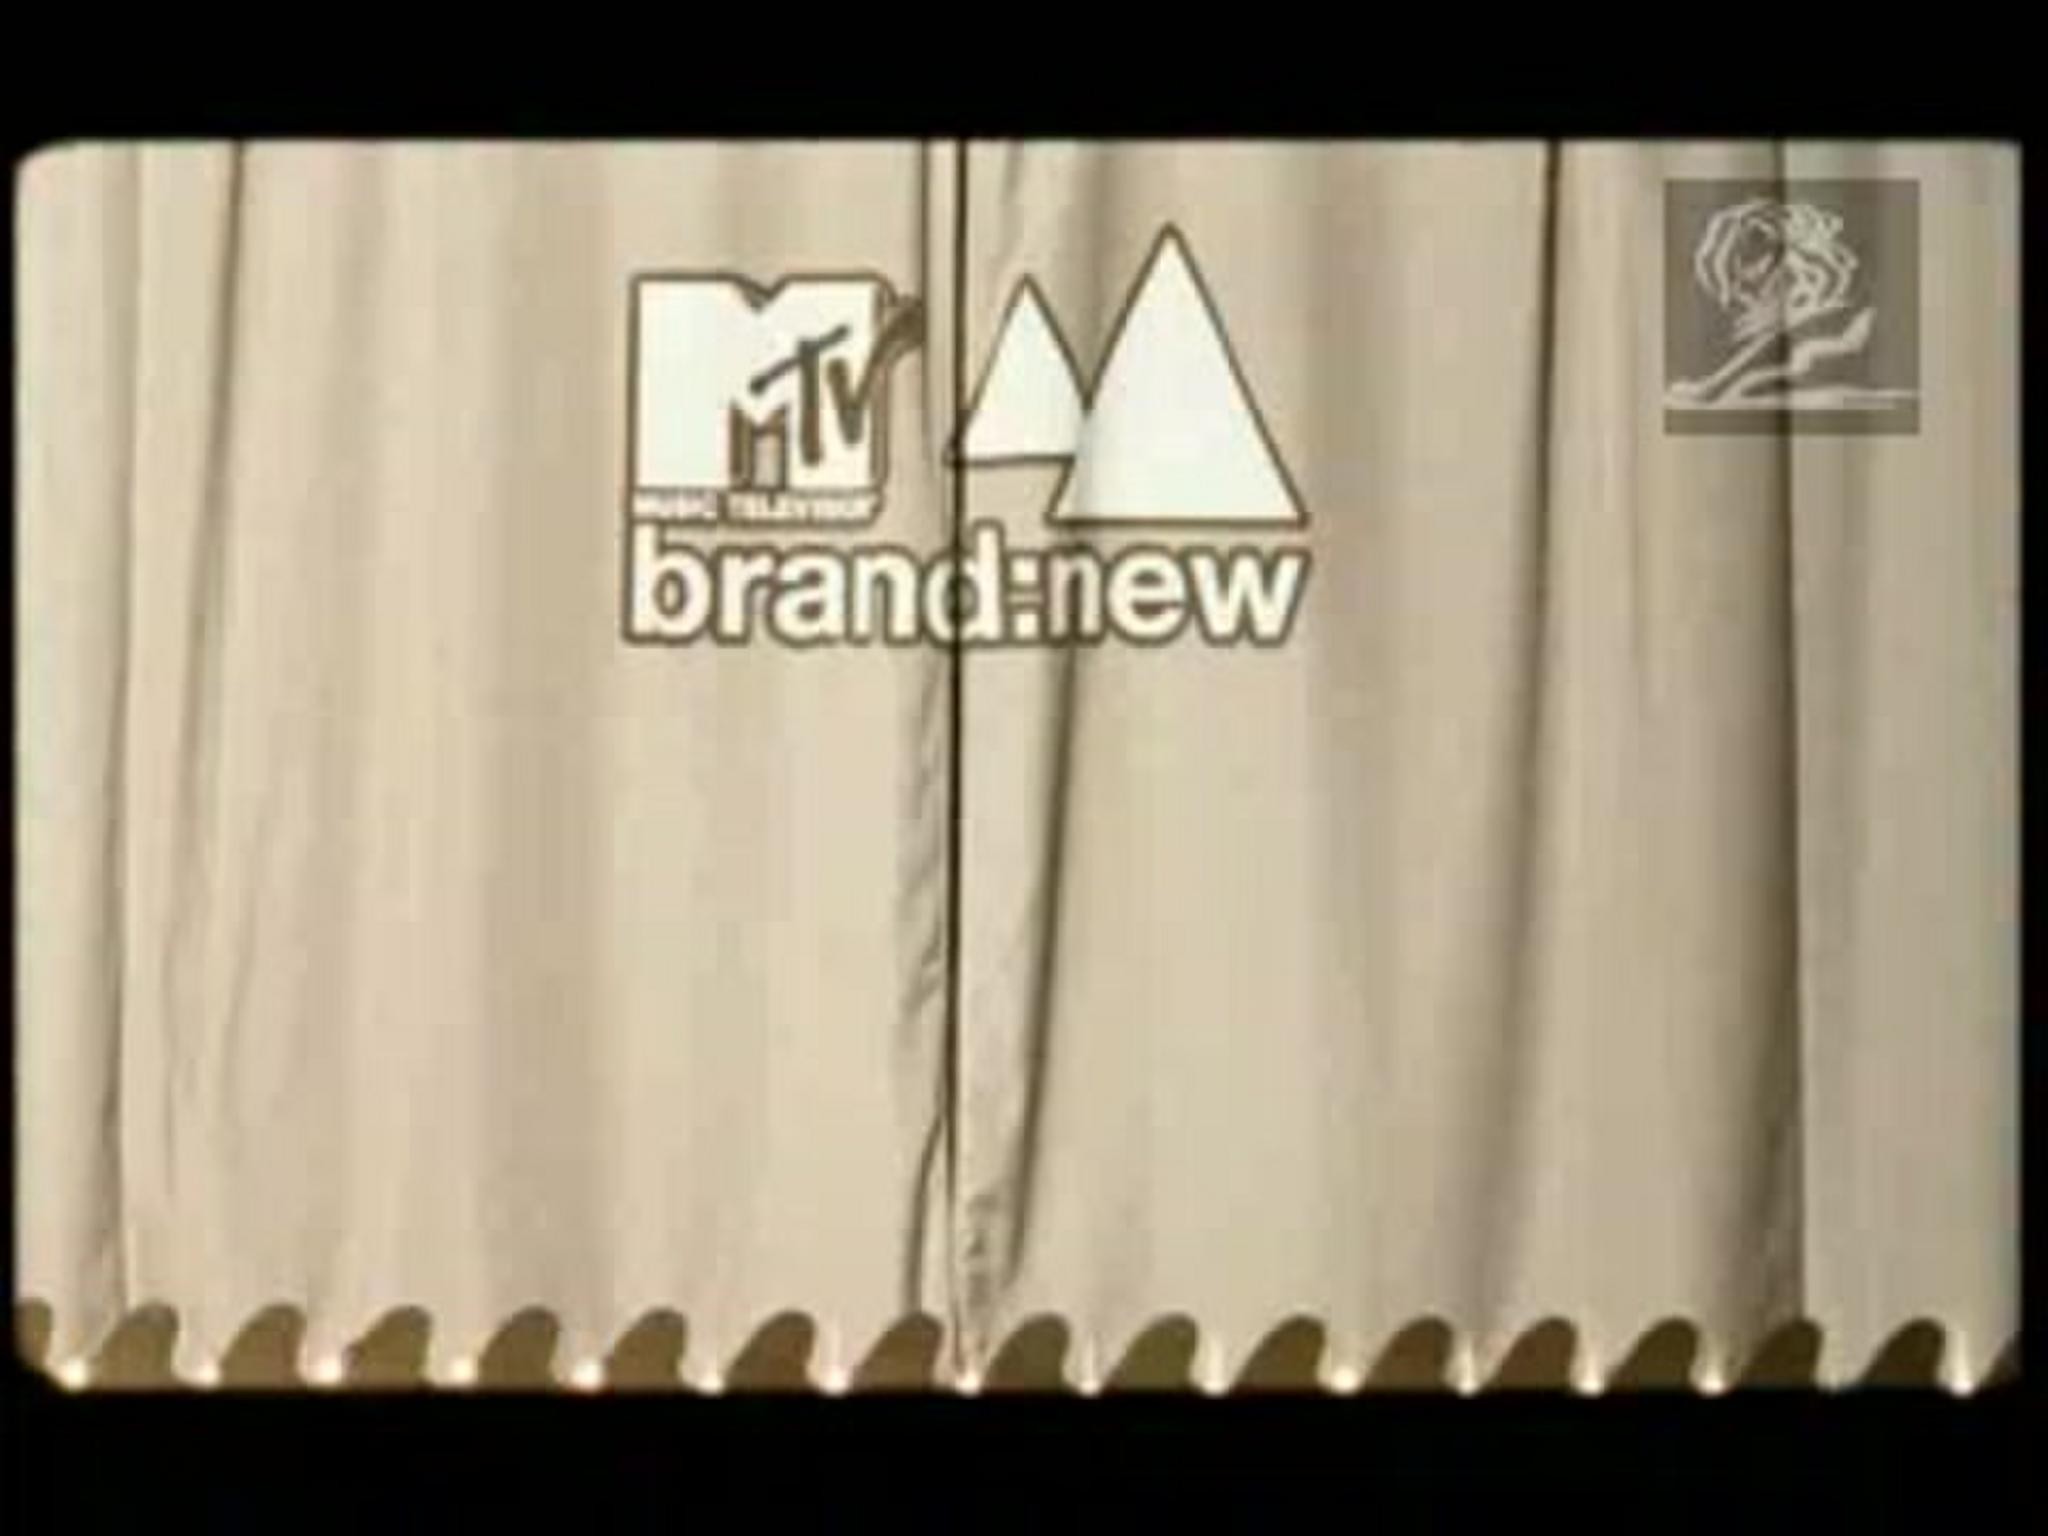 MTV BRAND NEW